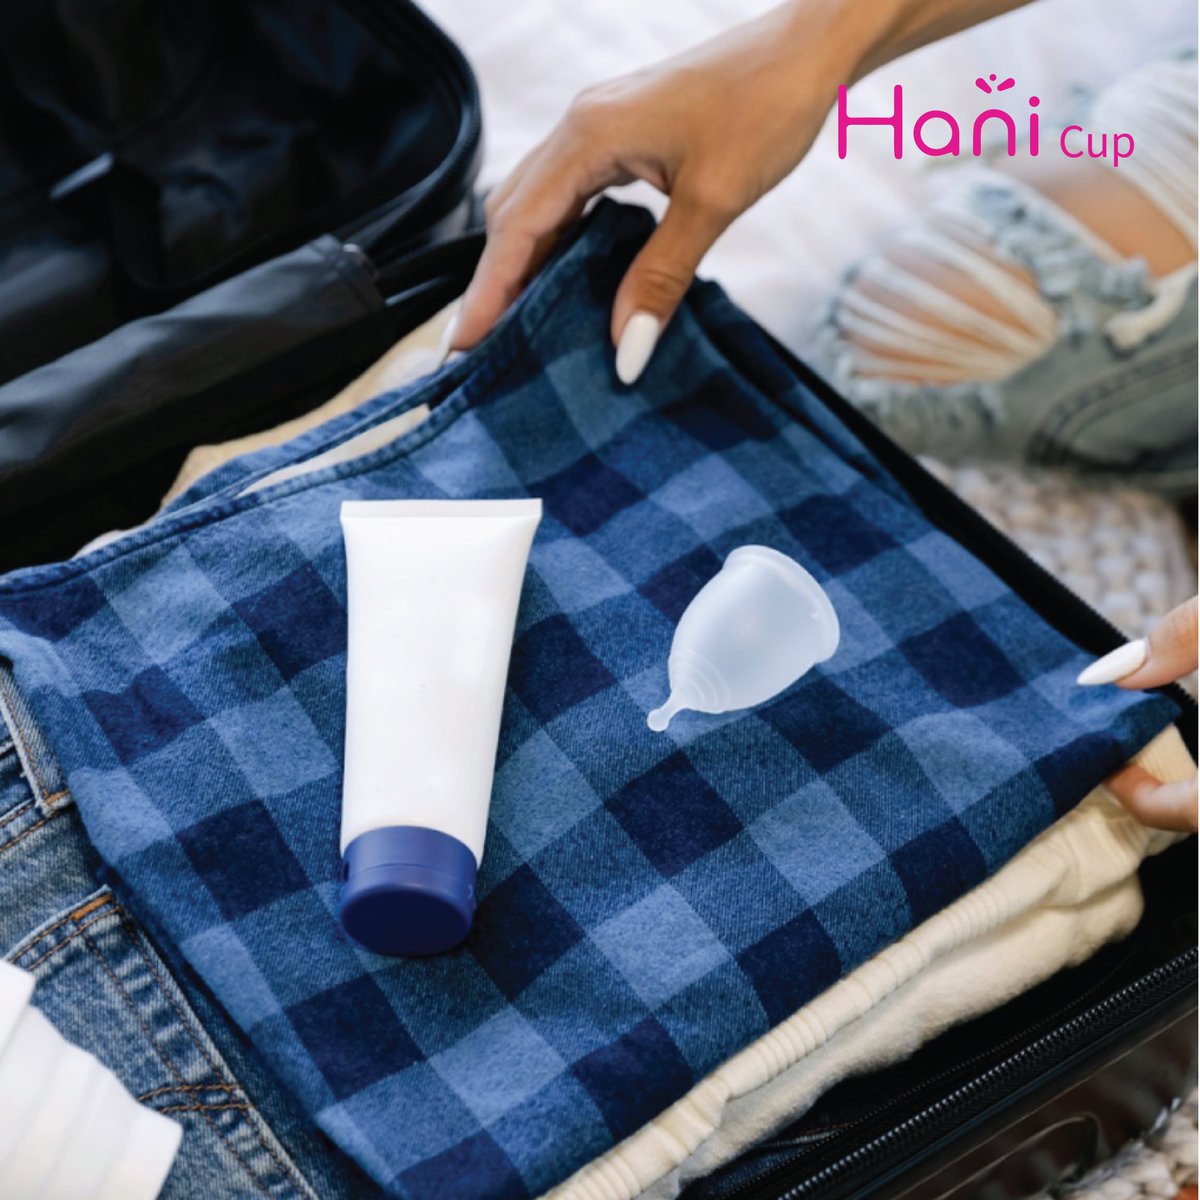 Ladies! Travel companion just in case 💃

#MenstrualHealth #Kenya #HaniCup #PeriodFreedom #ALifeChangingGift